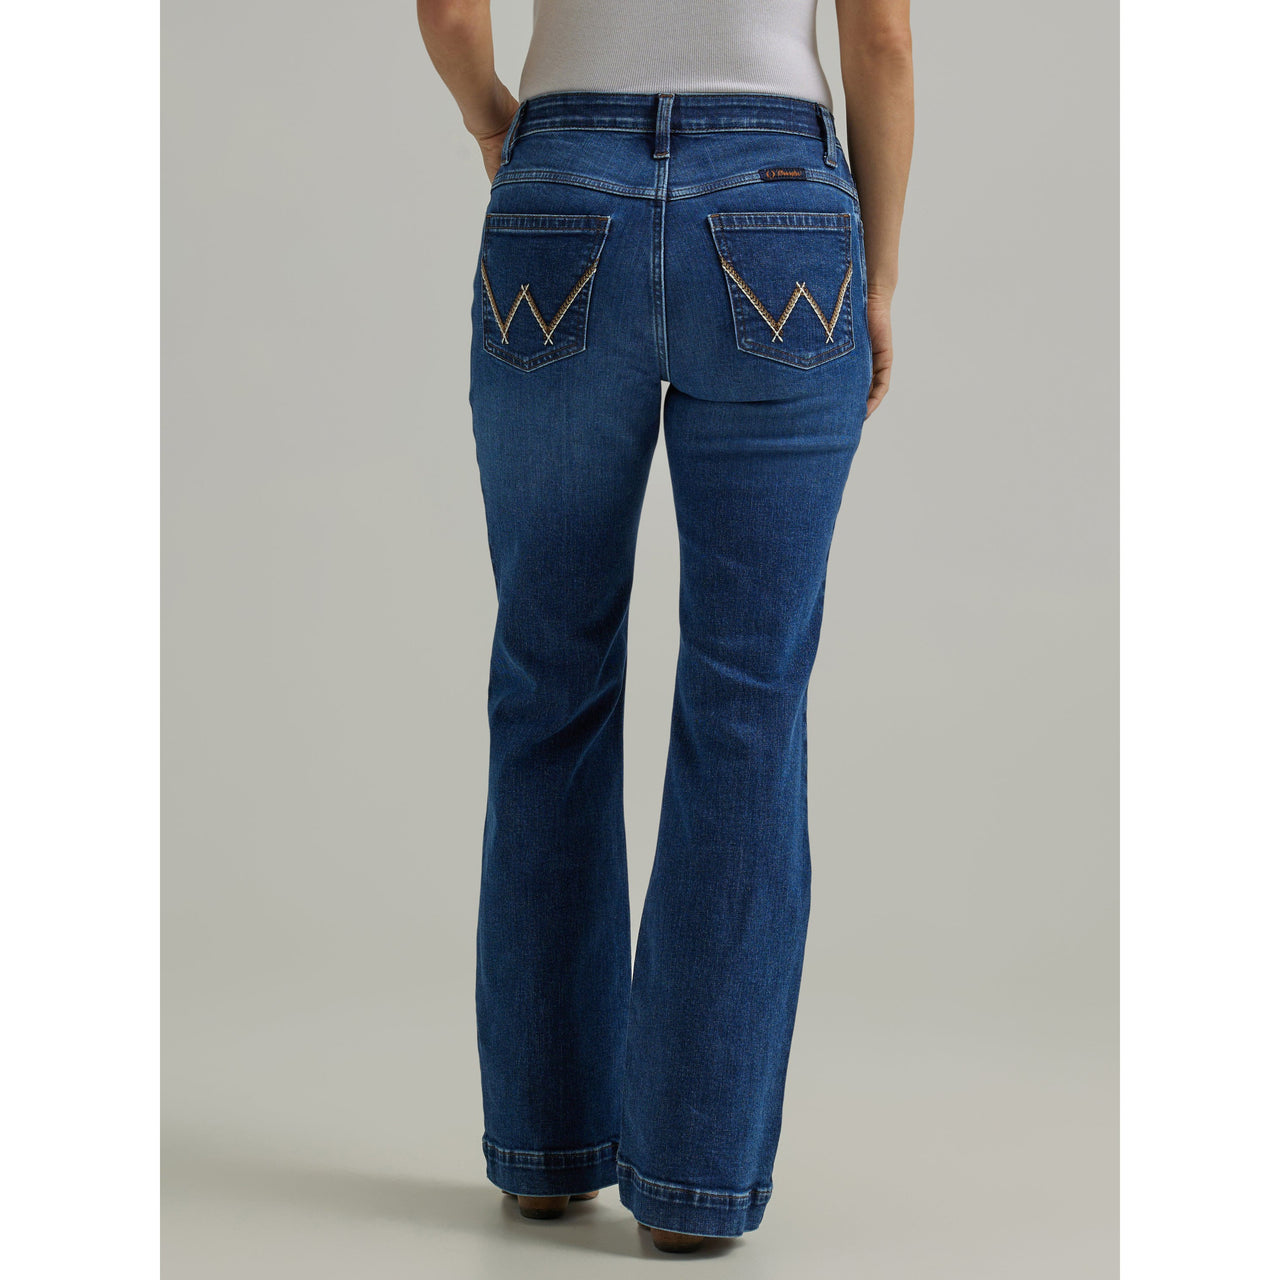 Wrangler Women's Ultimate Riding Willow Trouser Jeans - Parker